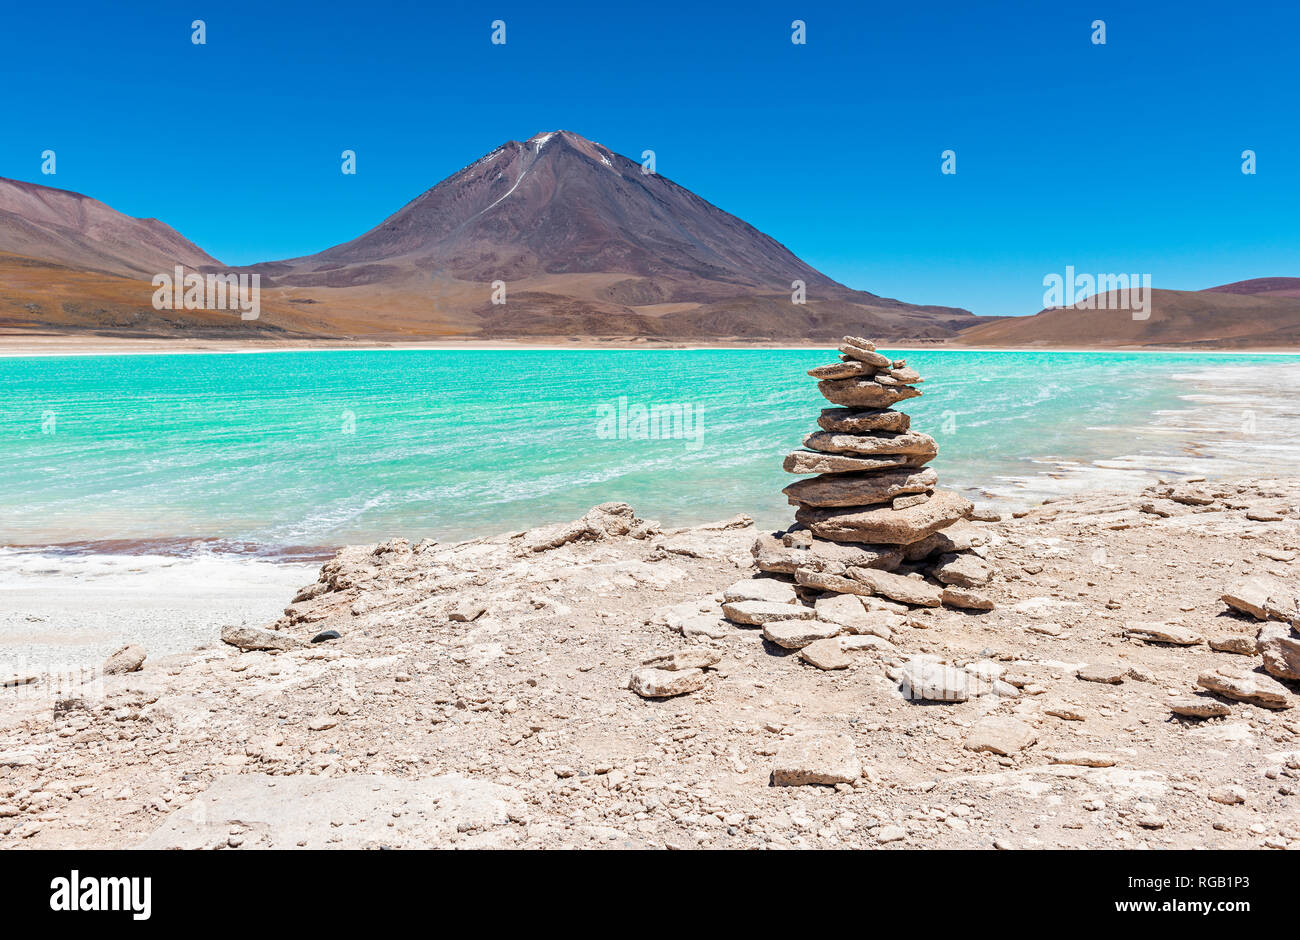 The Laguna Verde or Green Lagoon in the altiplano of Bolivia with the Licancabur volcano in the background near the Salar de Uyuni (Uyuni salt flat). Stock Photo